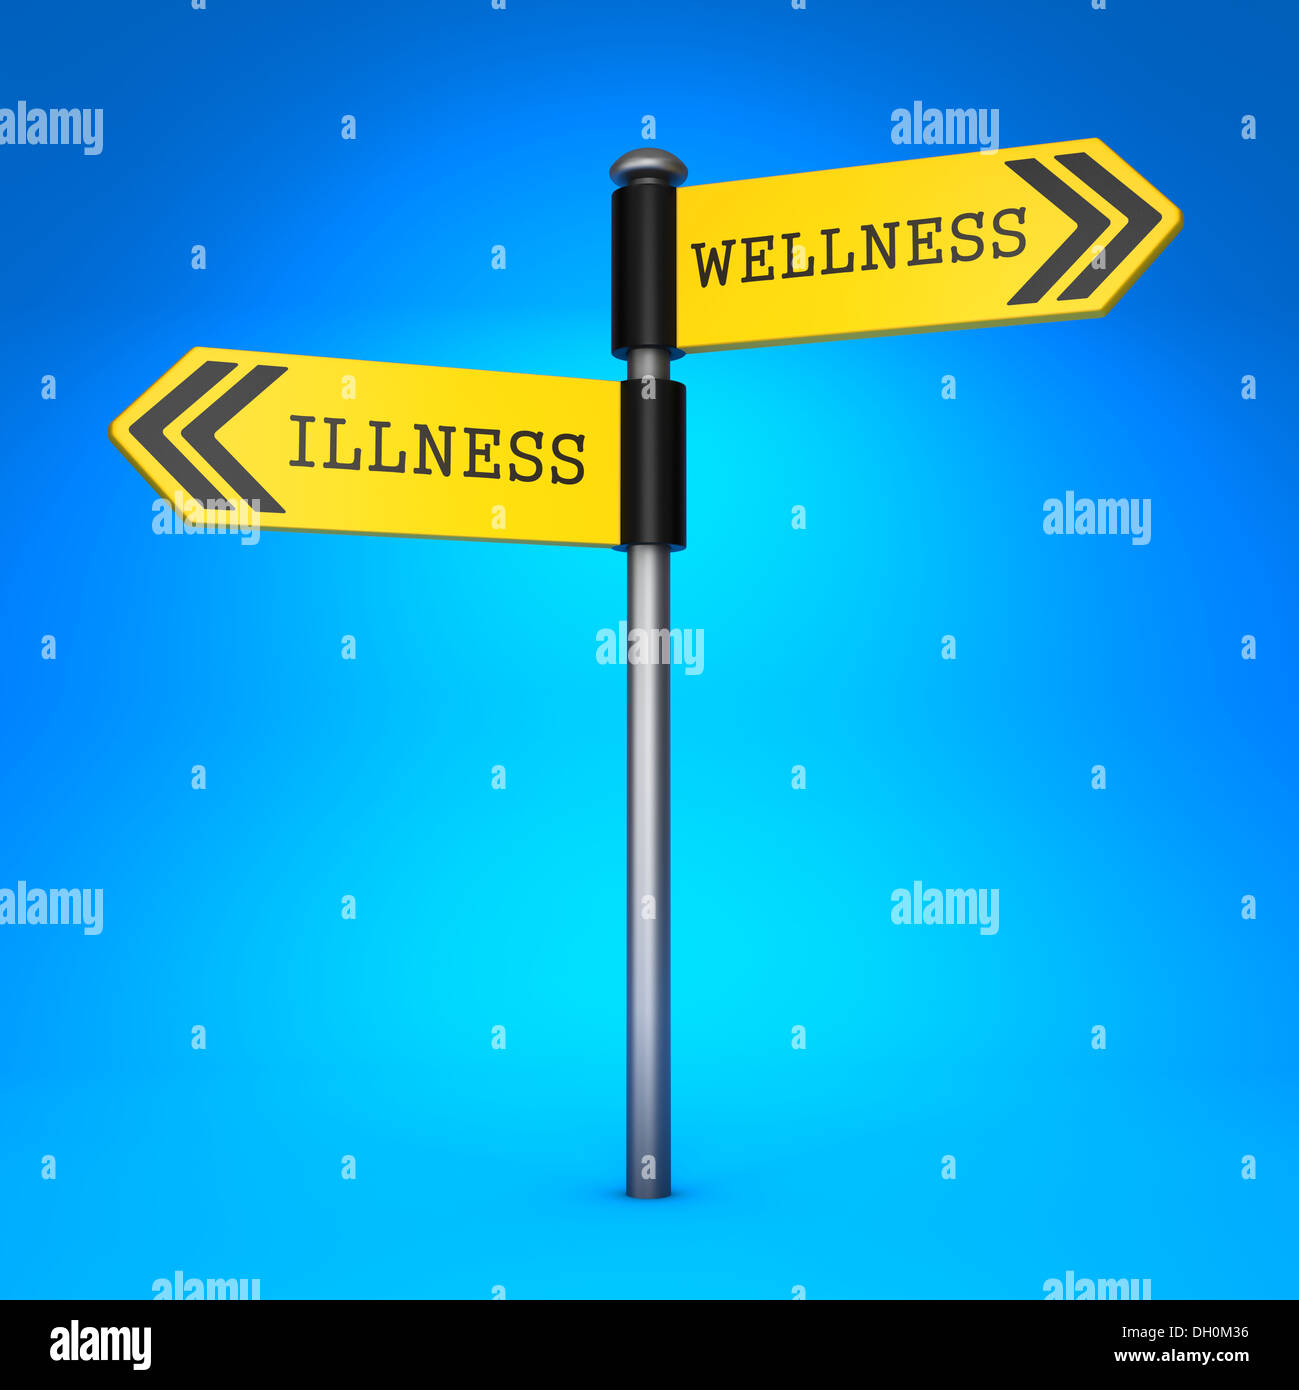 Wellness or Illness. Concept of Choice. Stock Photo